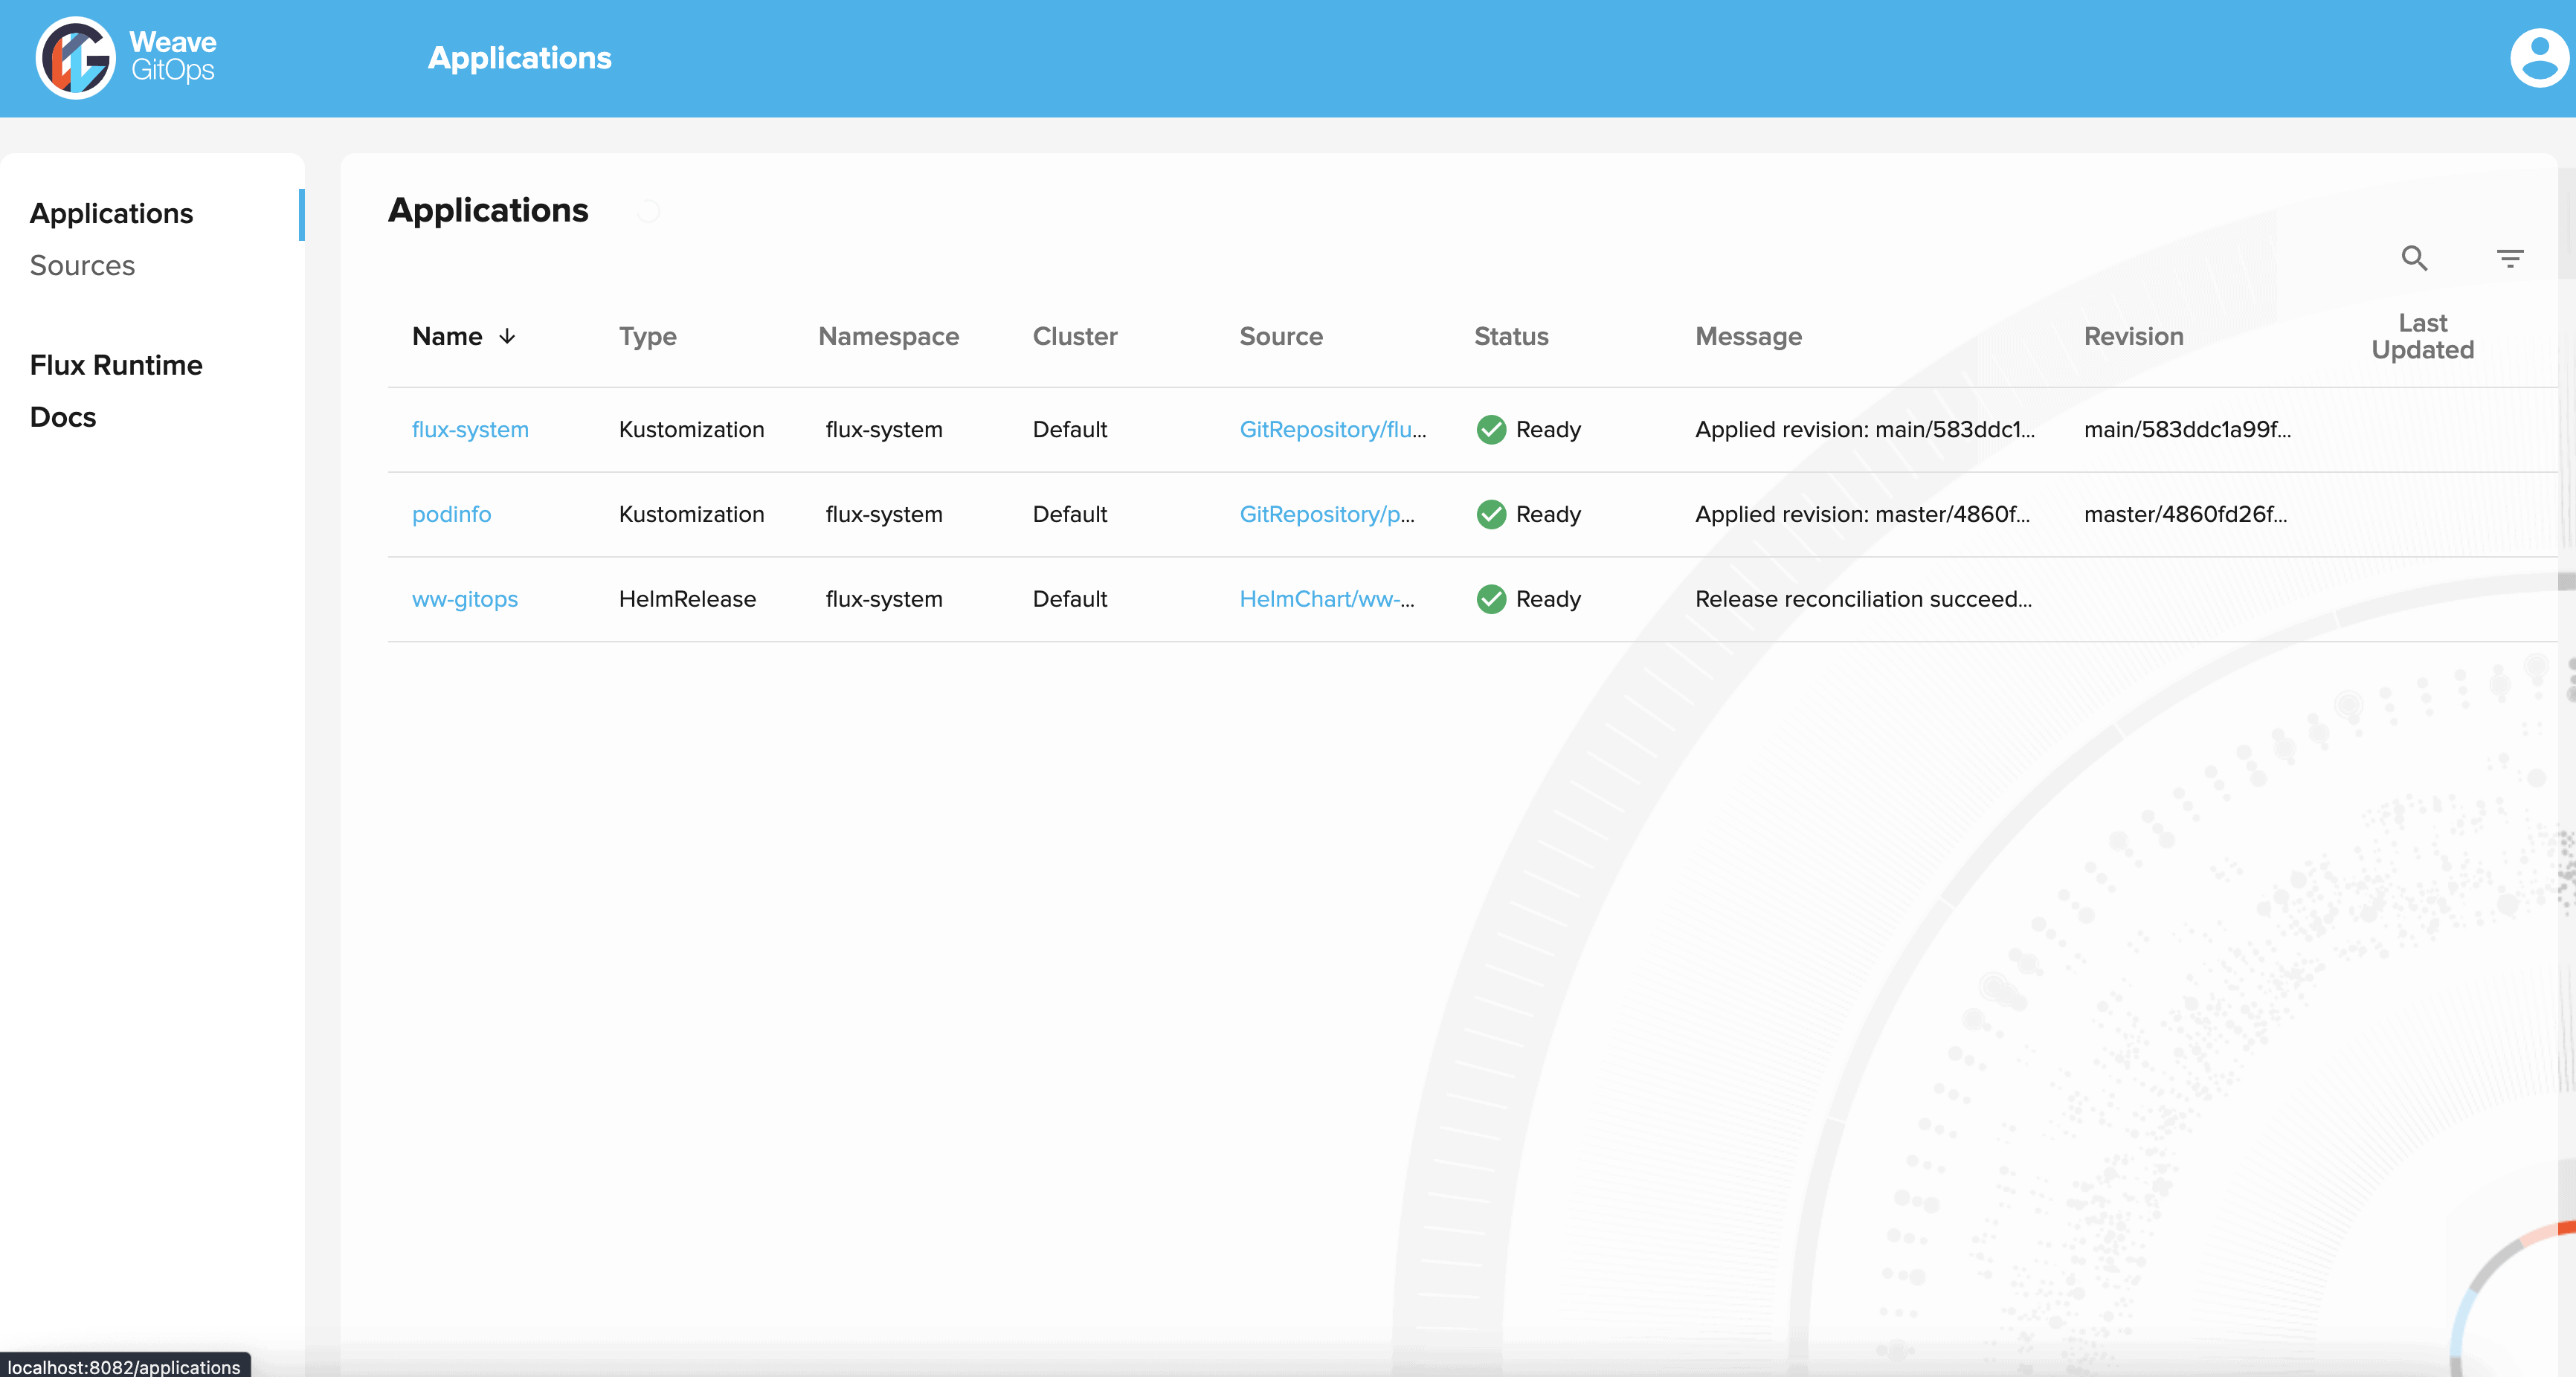 Screenshot showing applications on Weave GitOps